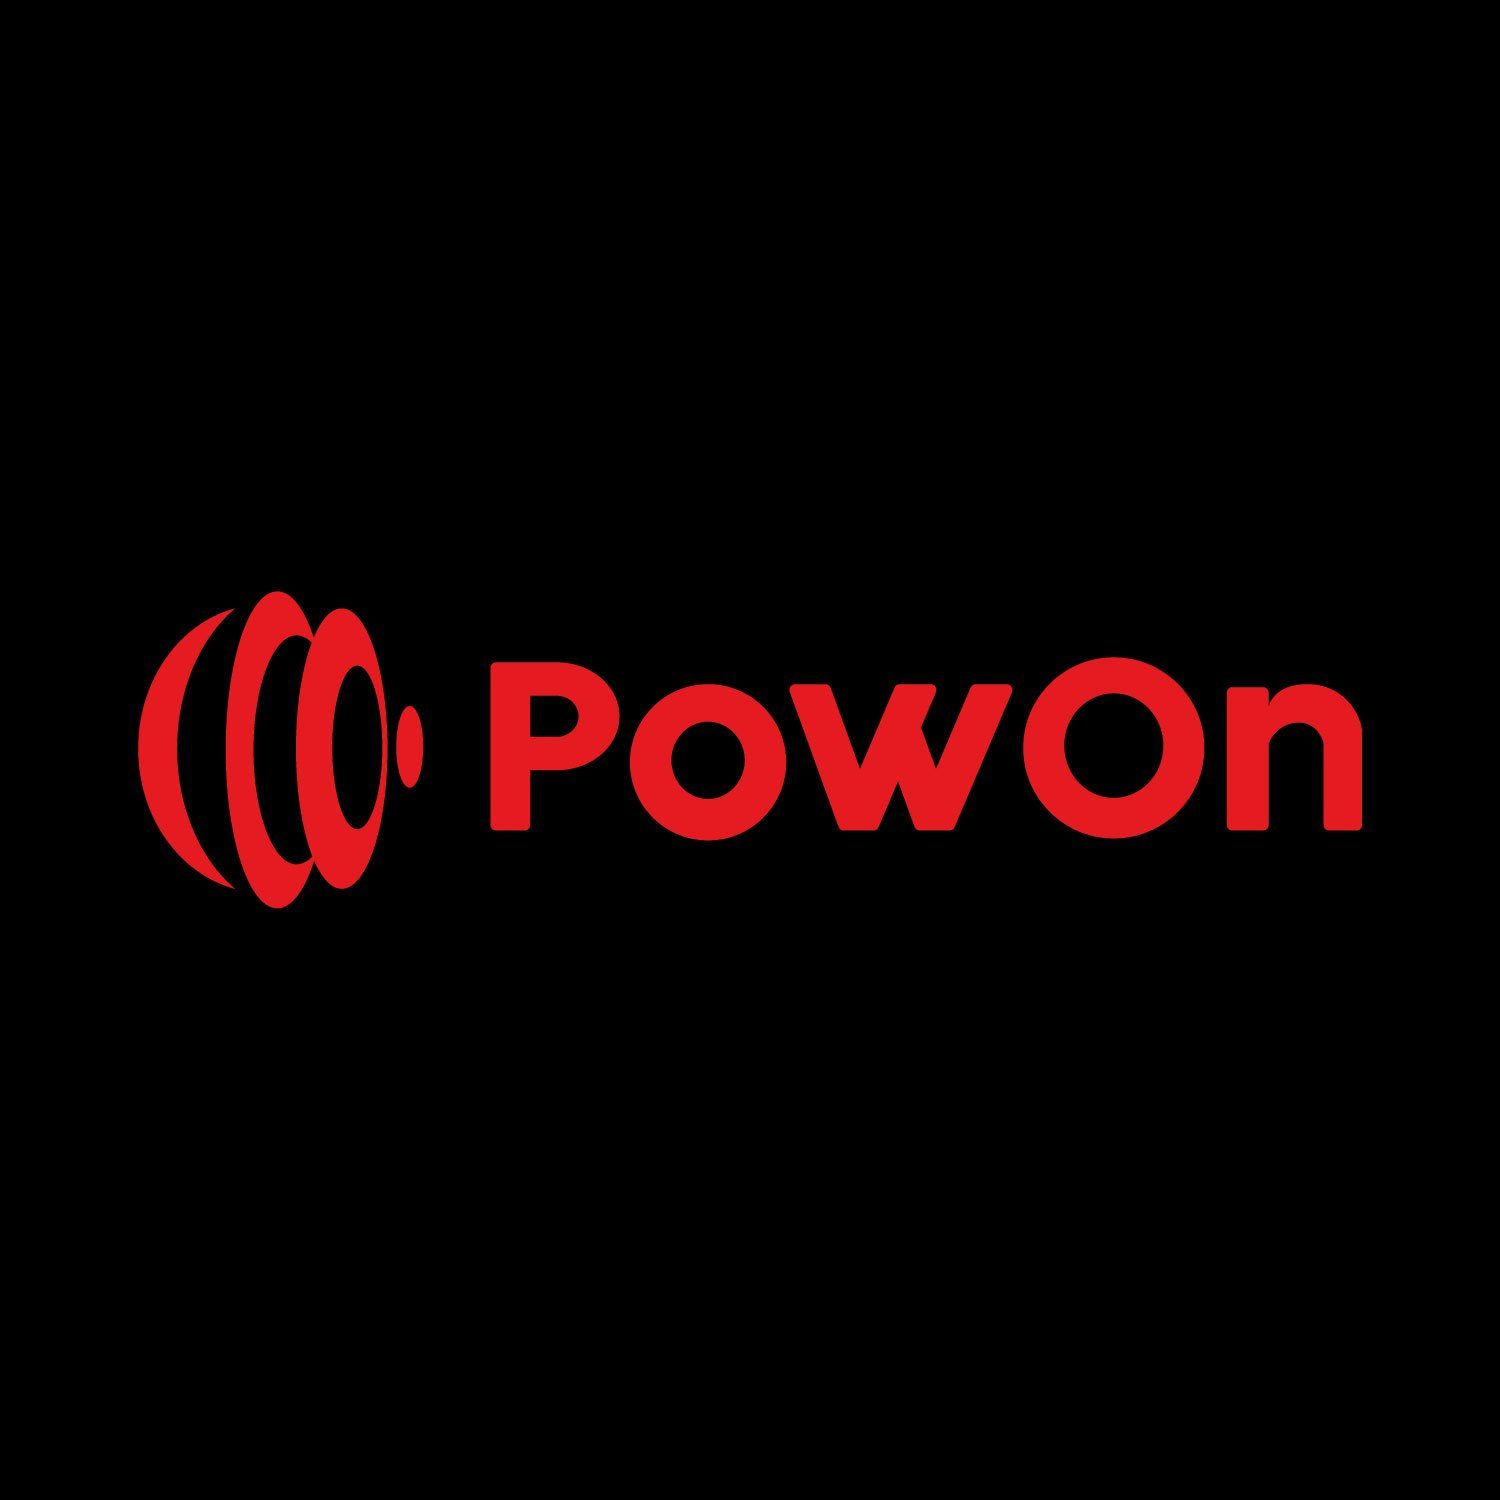 PowOn Ölradiator Ölradiator 2500W Energiesparend Luftbefeuchter mit 11 Rippen, & Wäschetrockner